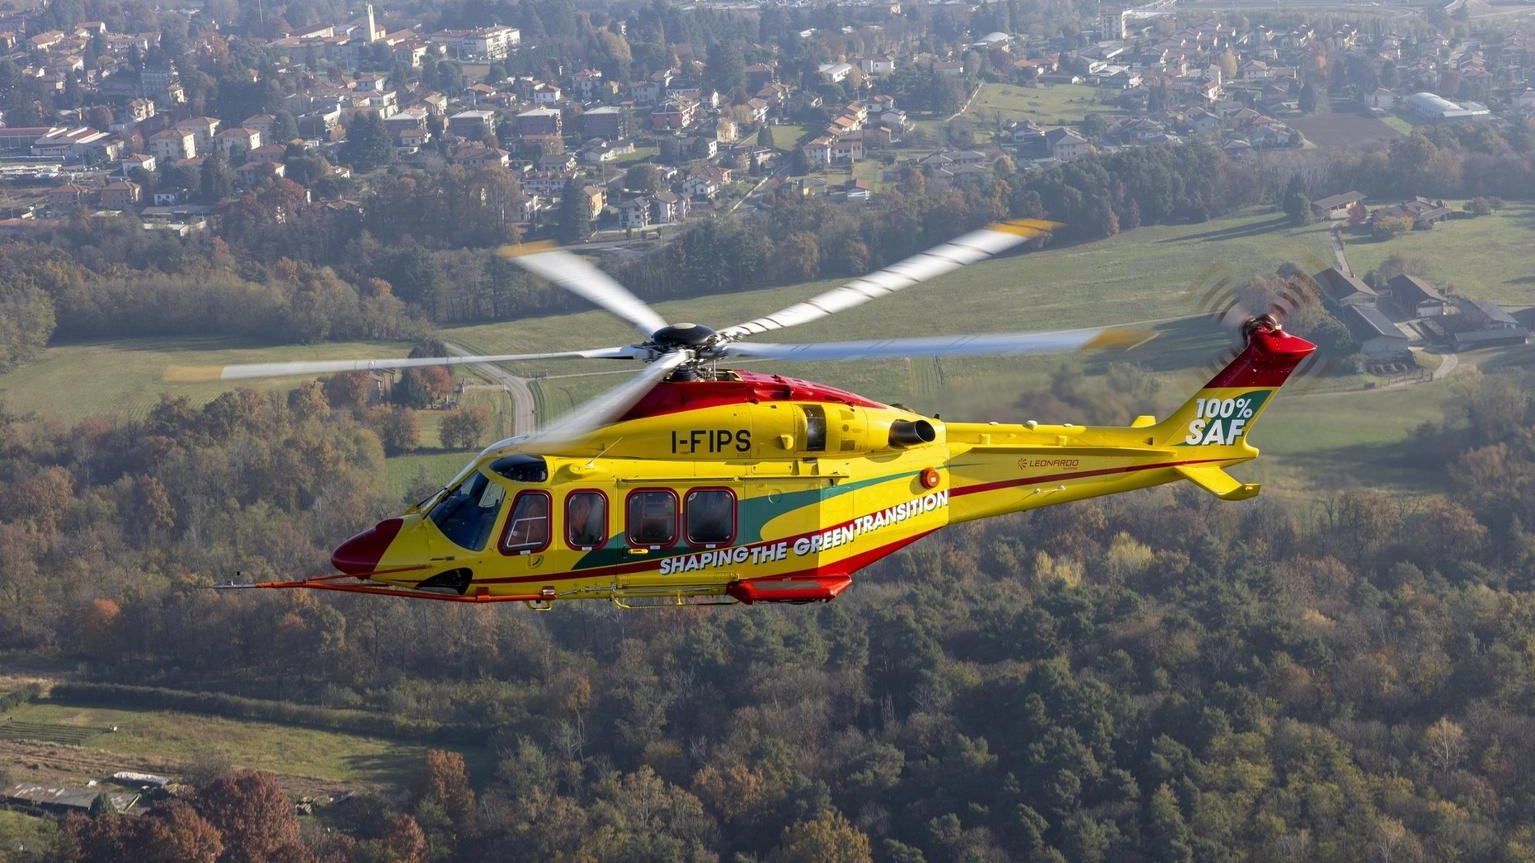 Leonardo, primo volo per un Aw139 con carburante al 100% 'Saf'